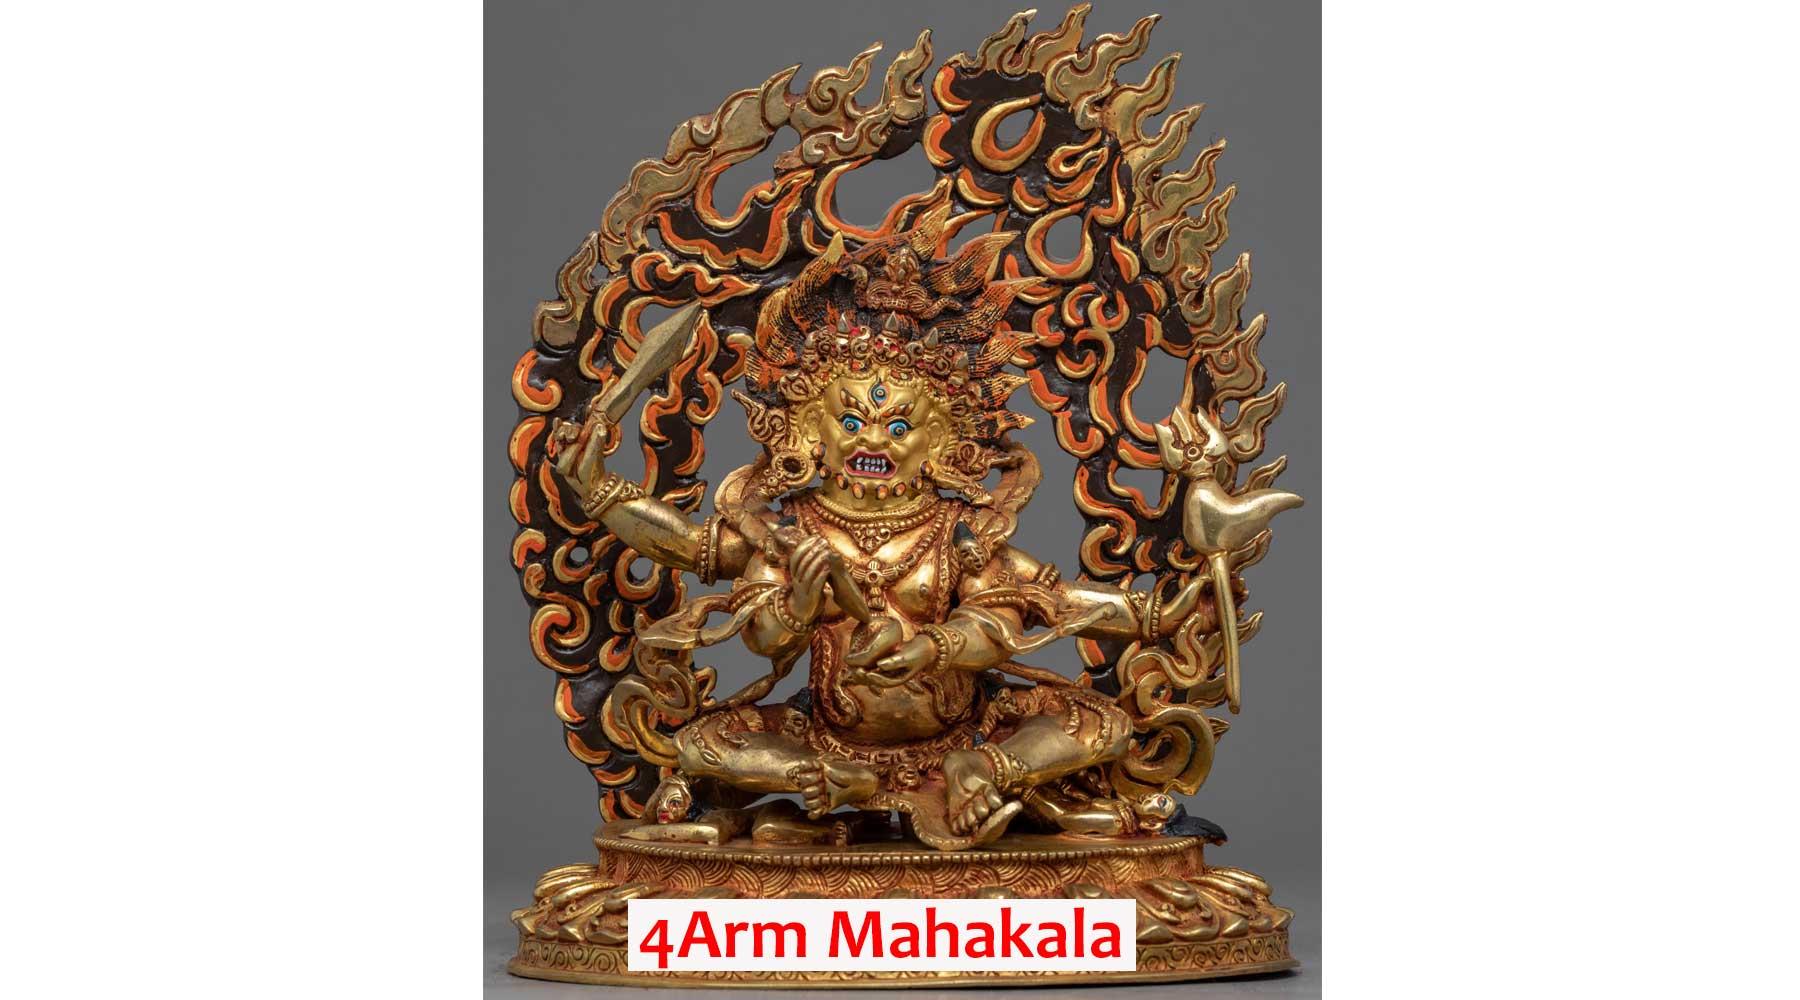 4 arm mahakala gold plated statue